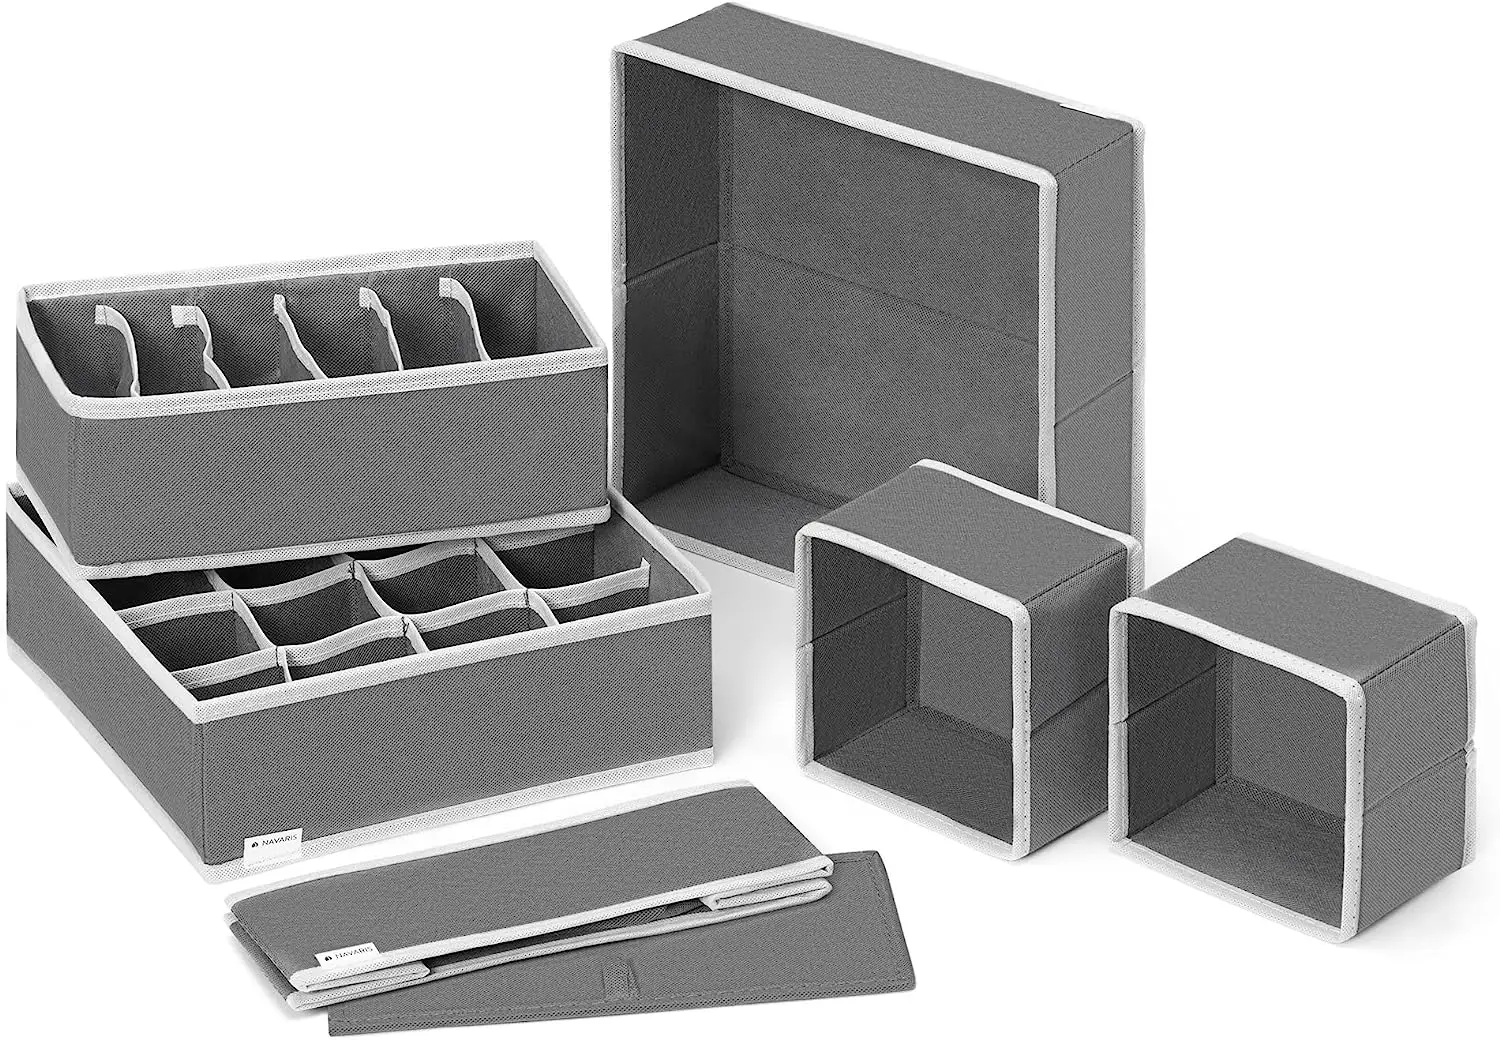 

6X Organizadores de cajones con Compartimentos - Caja de almacenaje de Tela Plegable - Organizador de Armario para Ropa Interior